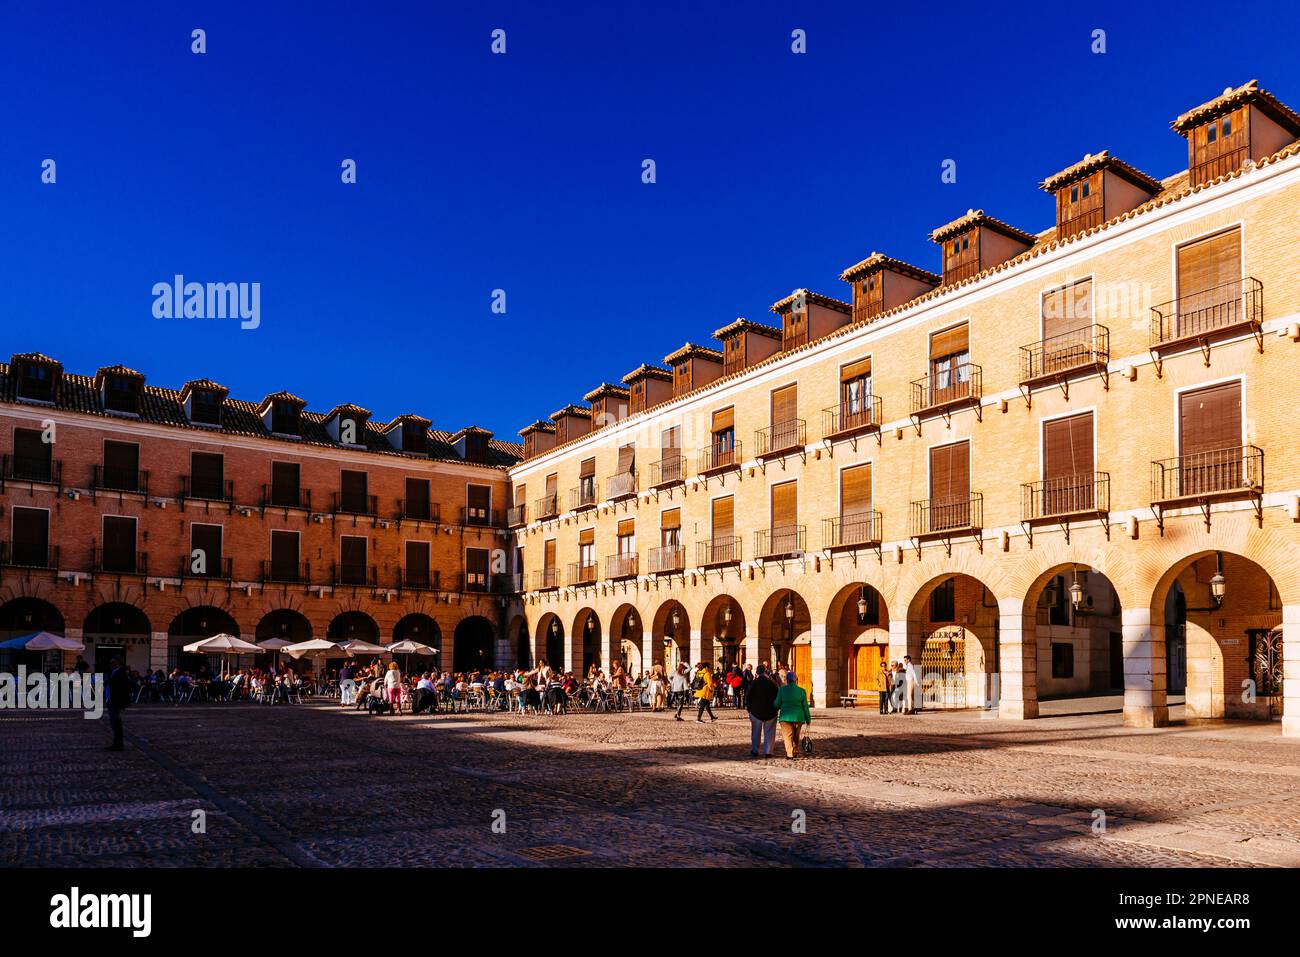 Place principale d'Ocaña - Plaza Mayor. Ocaña, Tolède, Castilla la Mancha, Espagne, Europe. Banque D'Images